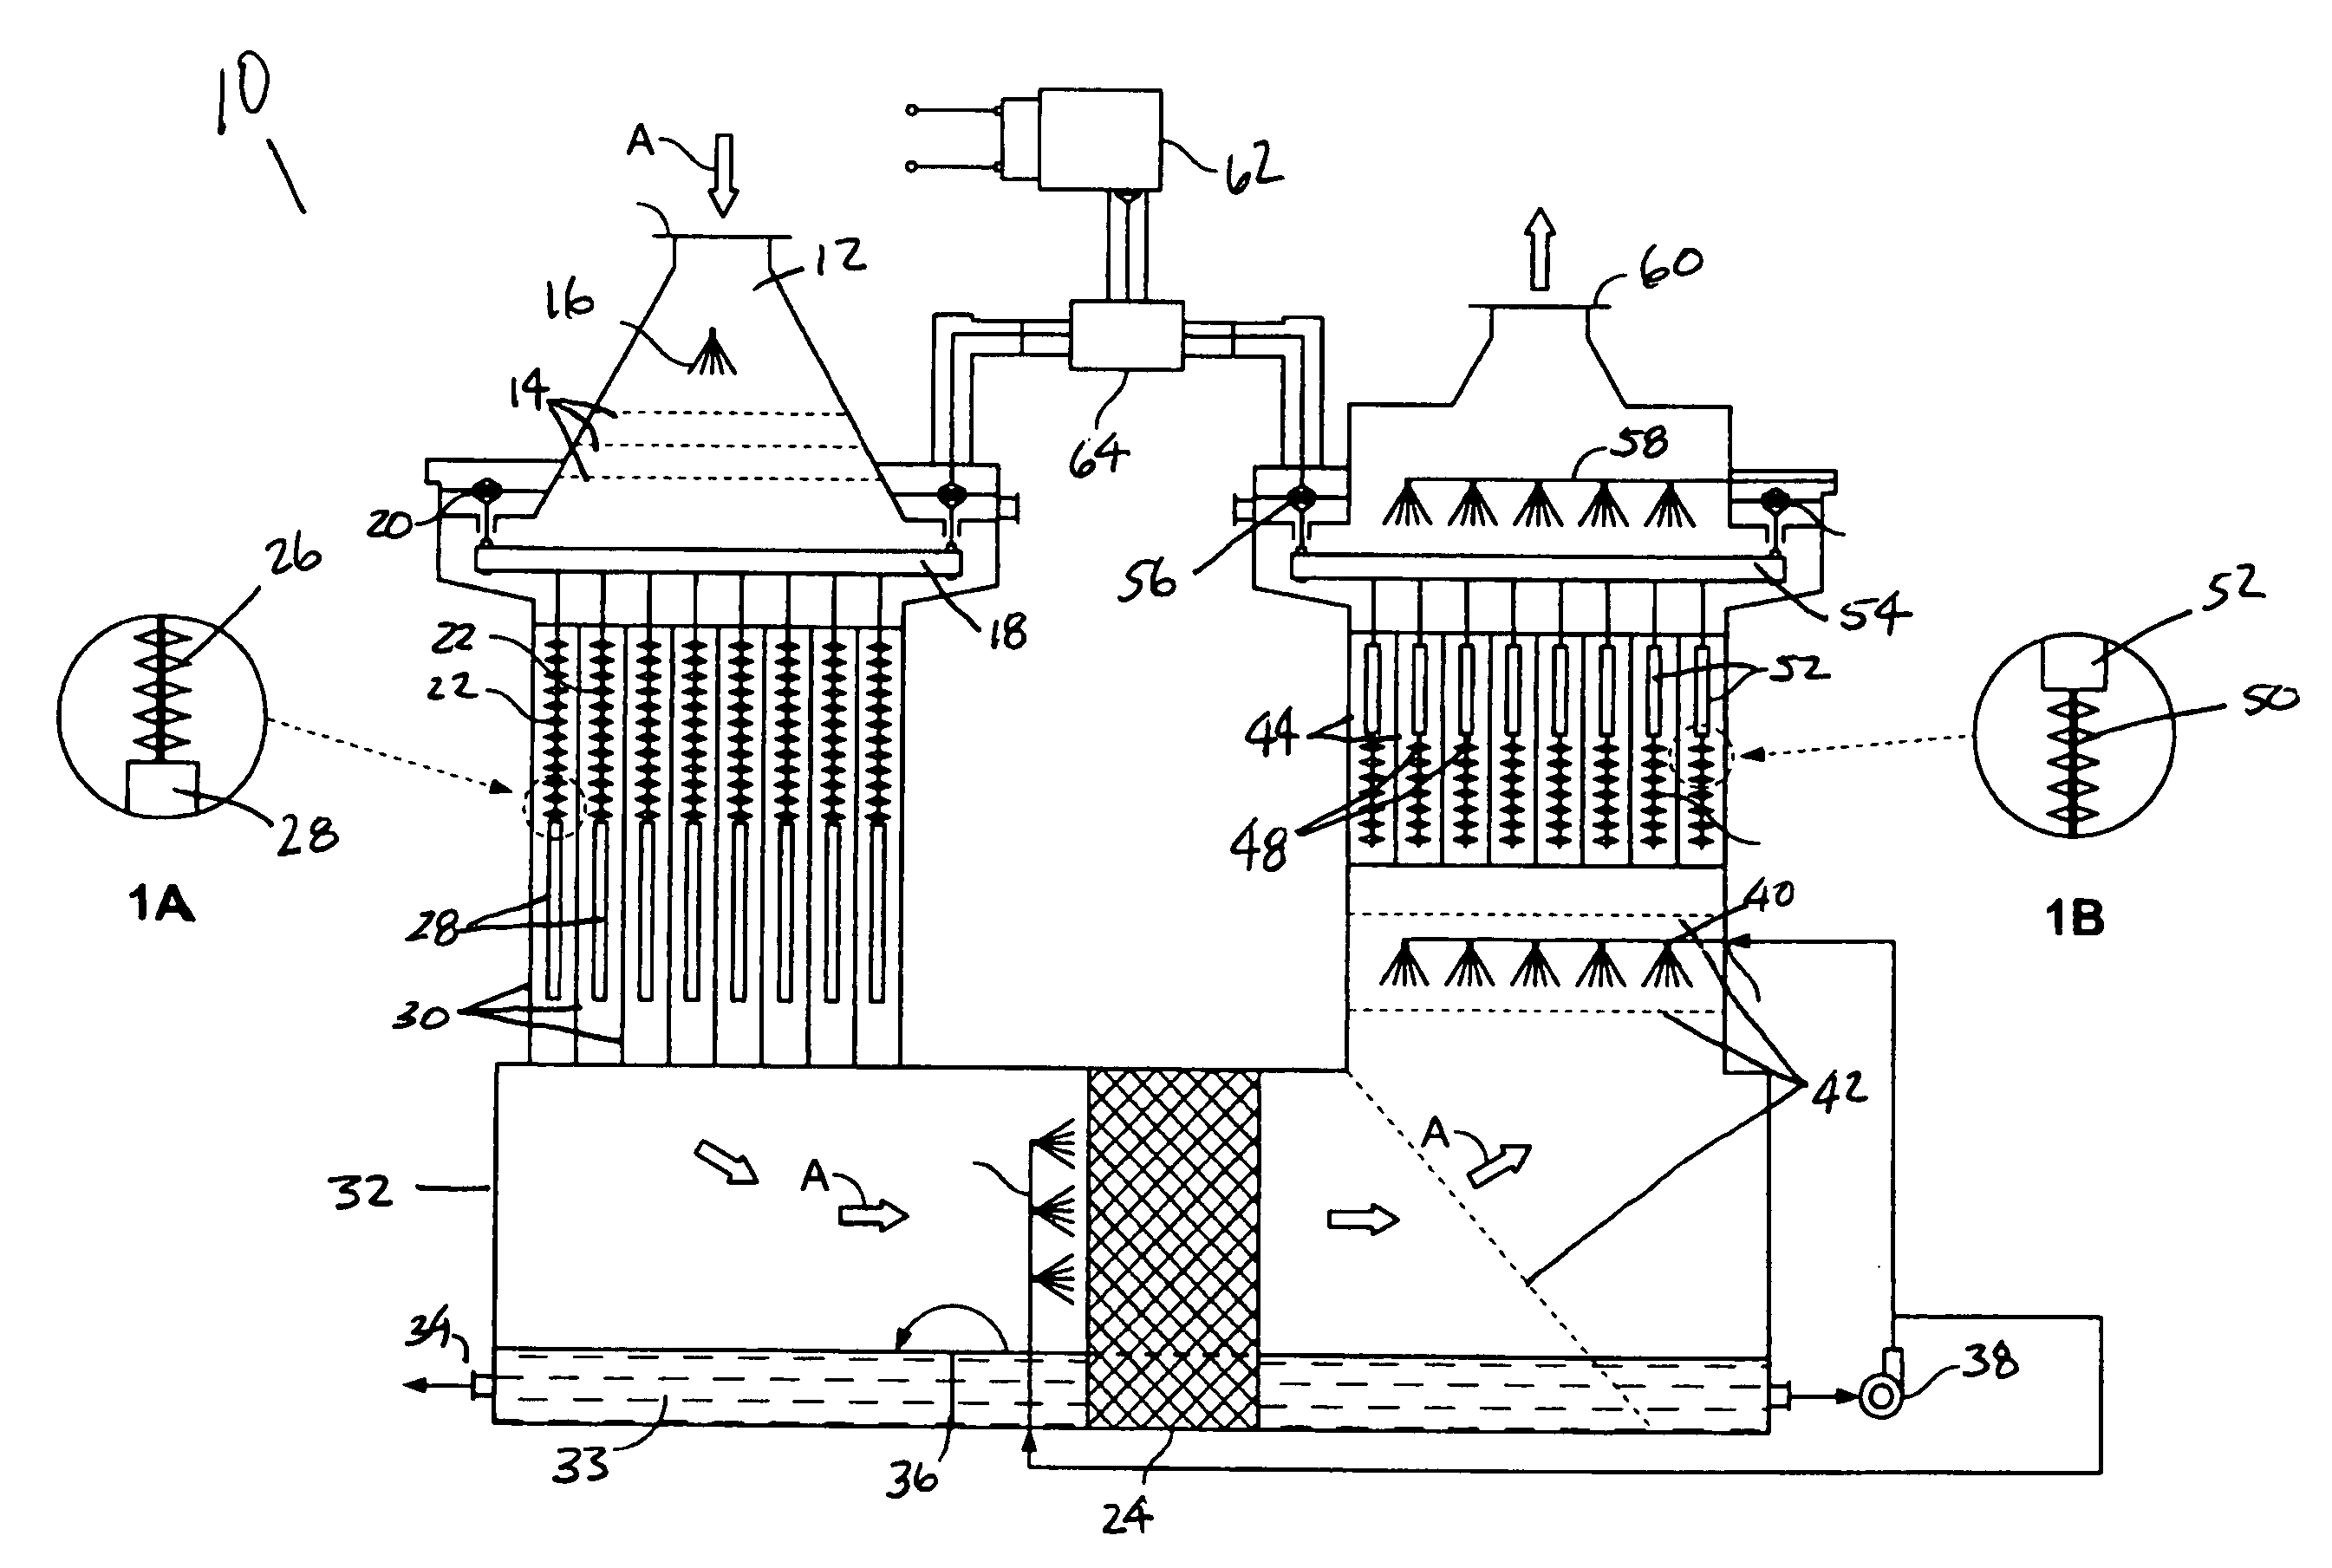 Wet electrostatic precipitator for treating oxidized biomass effluent